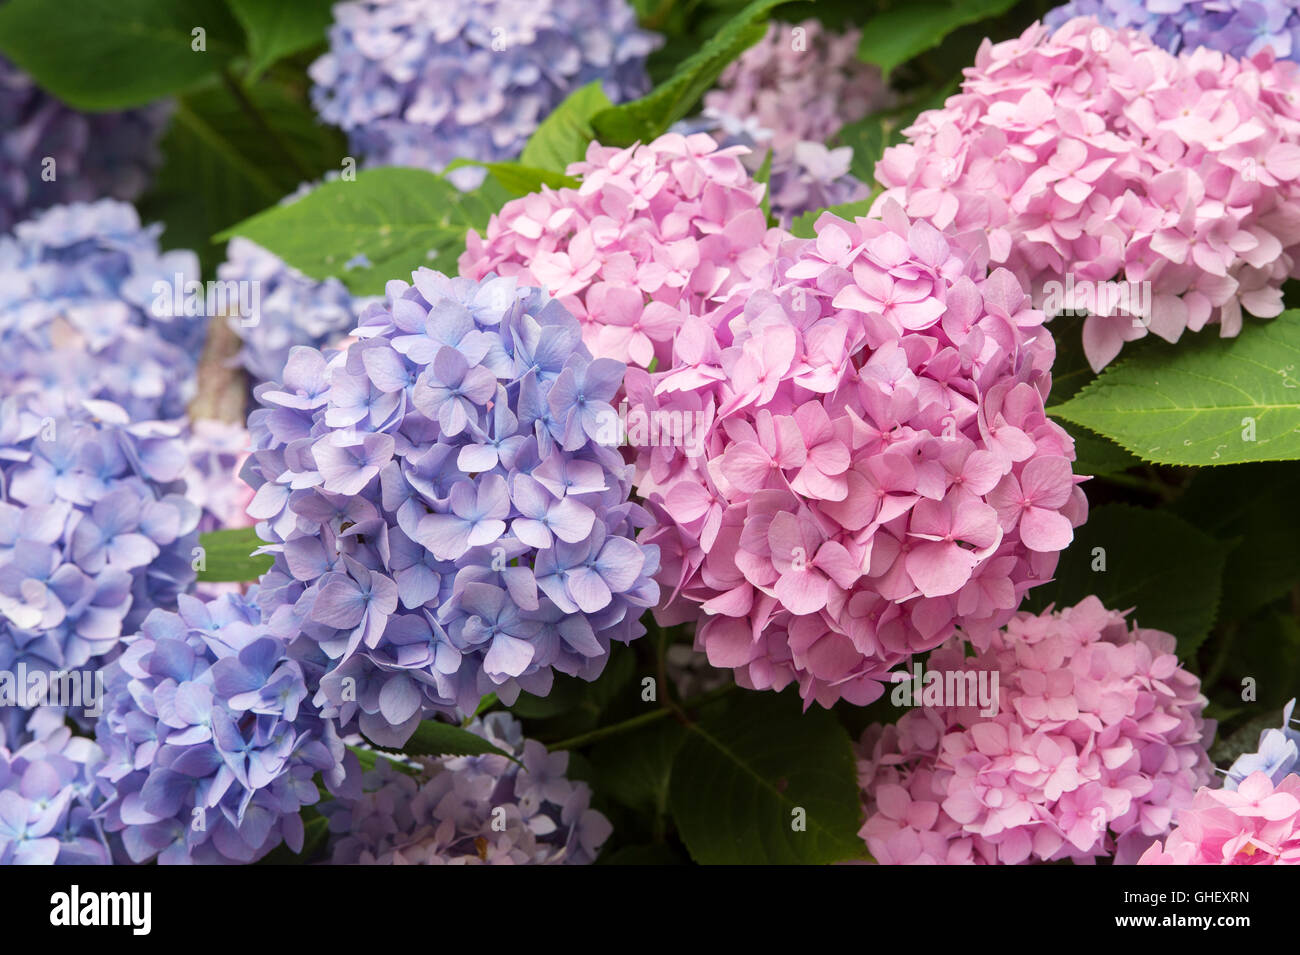 Hydrangea Macrophylla ‘Endless summer bailmer’ flowers Stock Photo